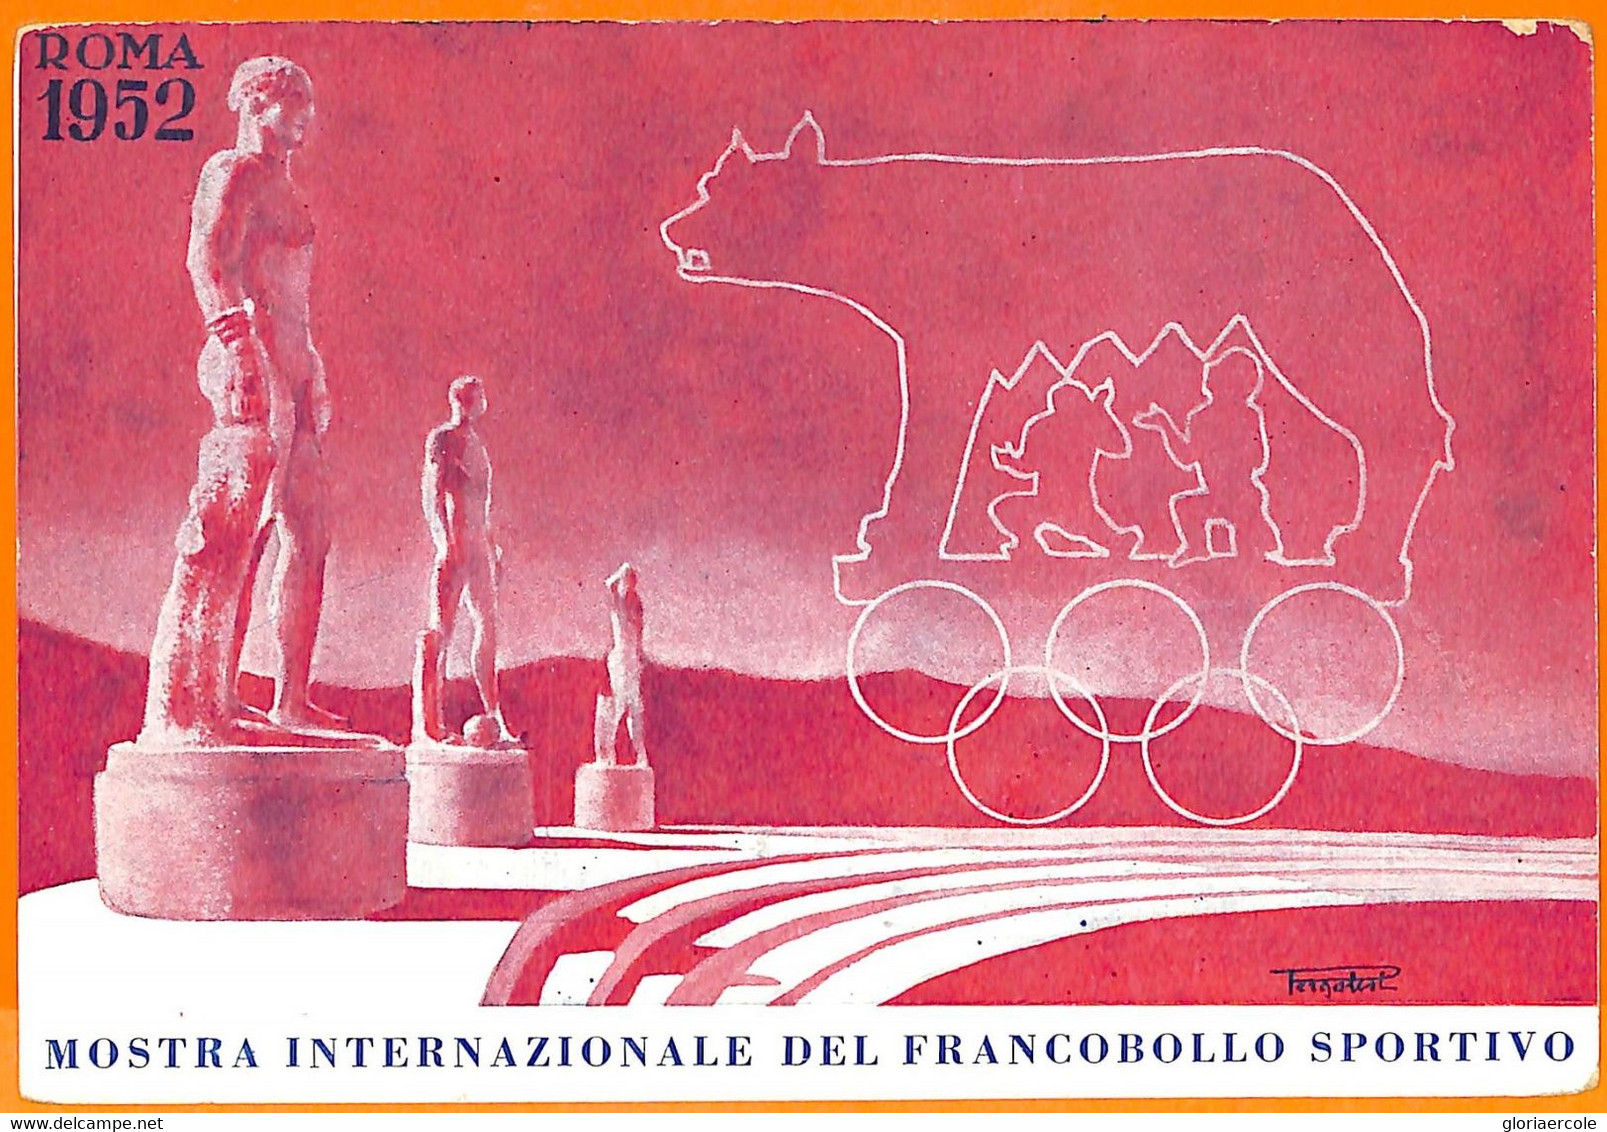 Aa2847 - Postal History - VINTAGE Illustrated CARD - 1952  Olympic Games ITALY - Summer 1952: Helsinki